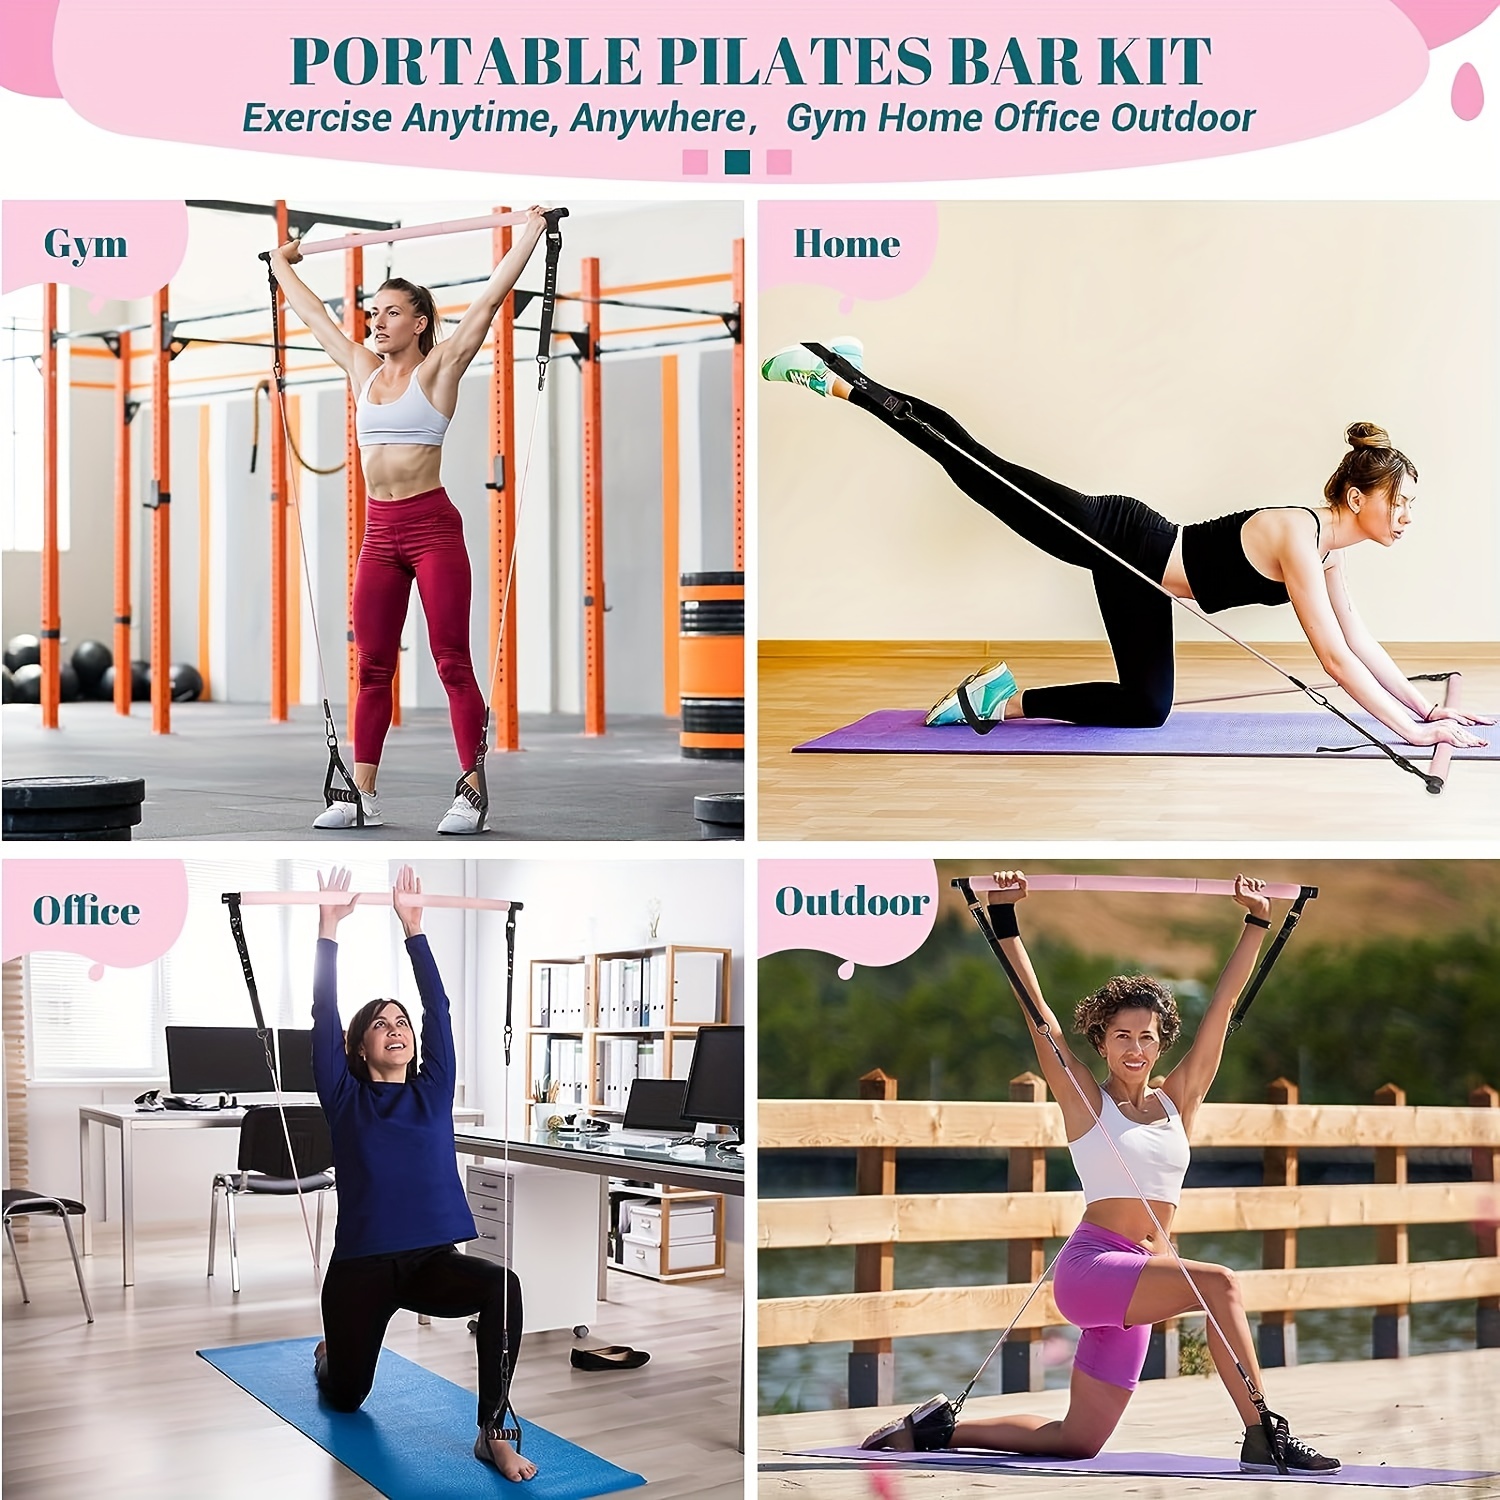 Kit Yoga Pilates Halter 1 Kg + Bola Pilates + Kit Theraband